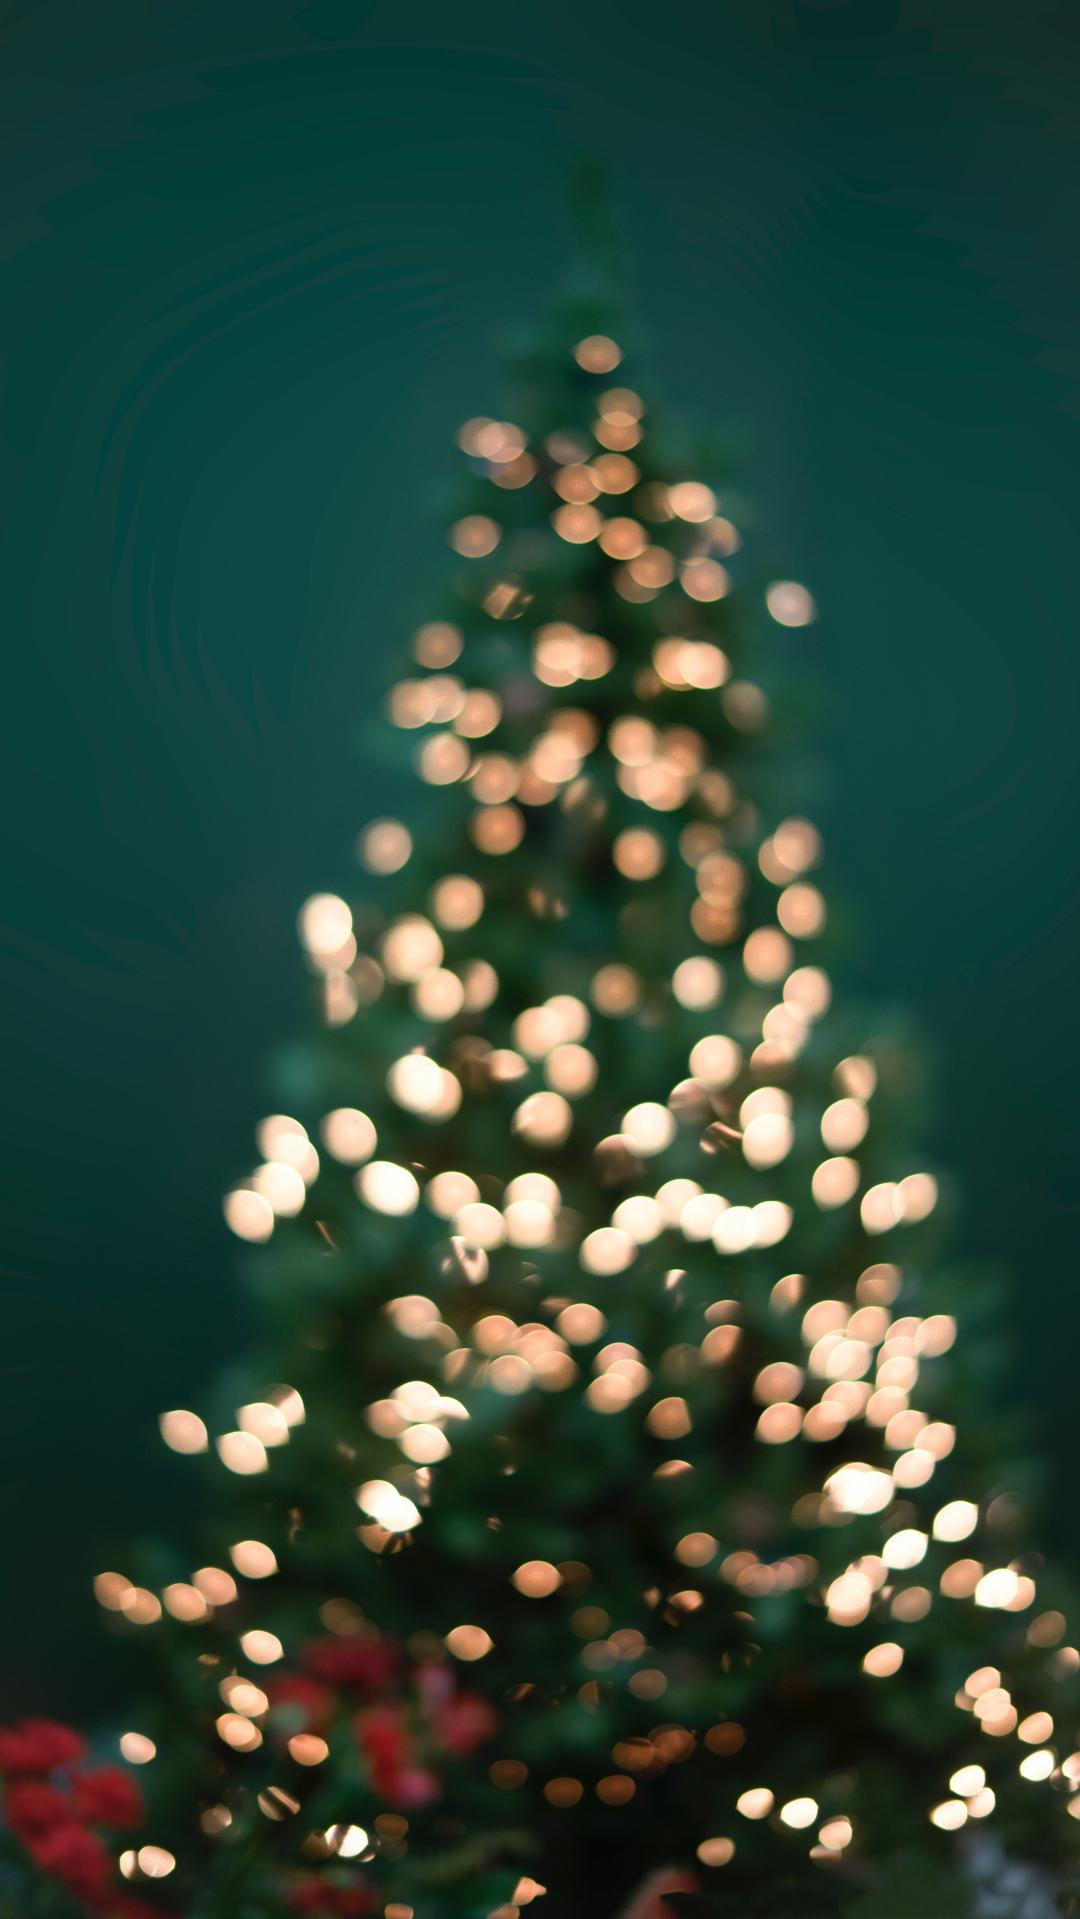 Christmas Lights iPhone Wallpaper iDrop News